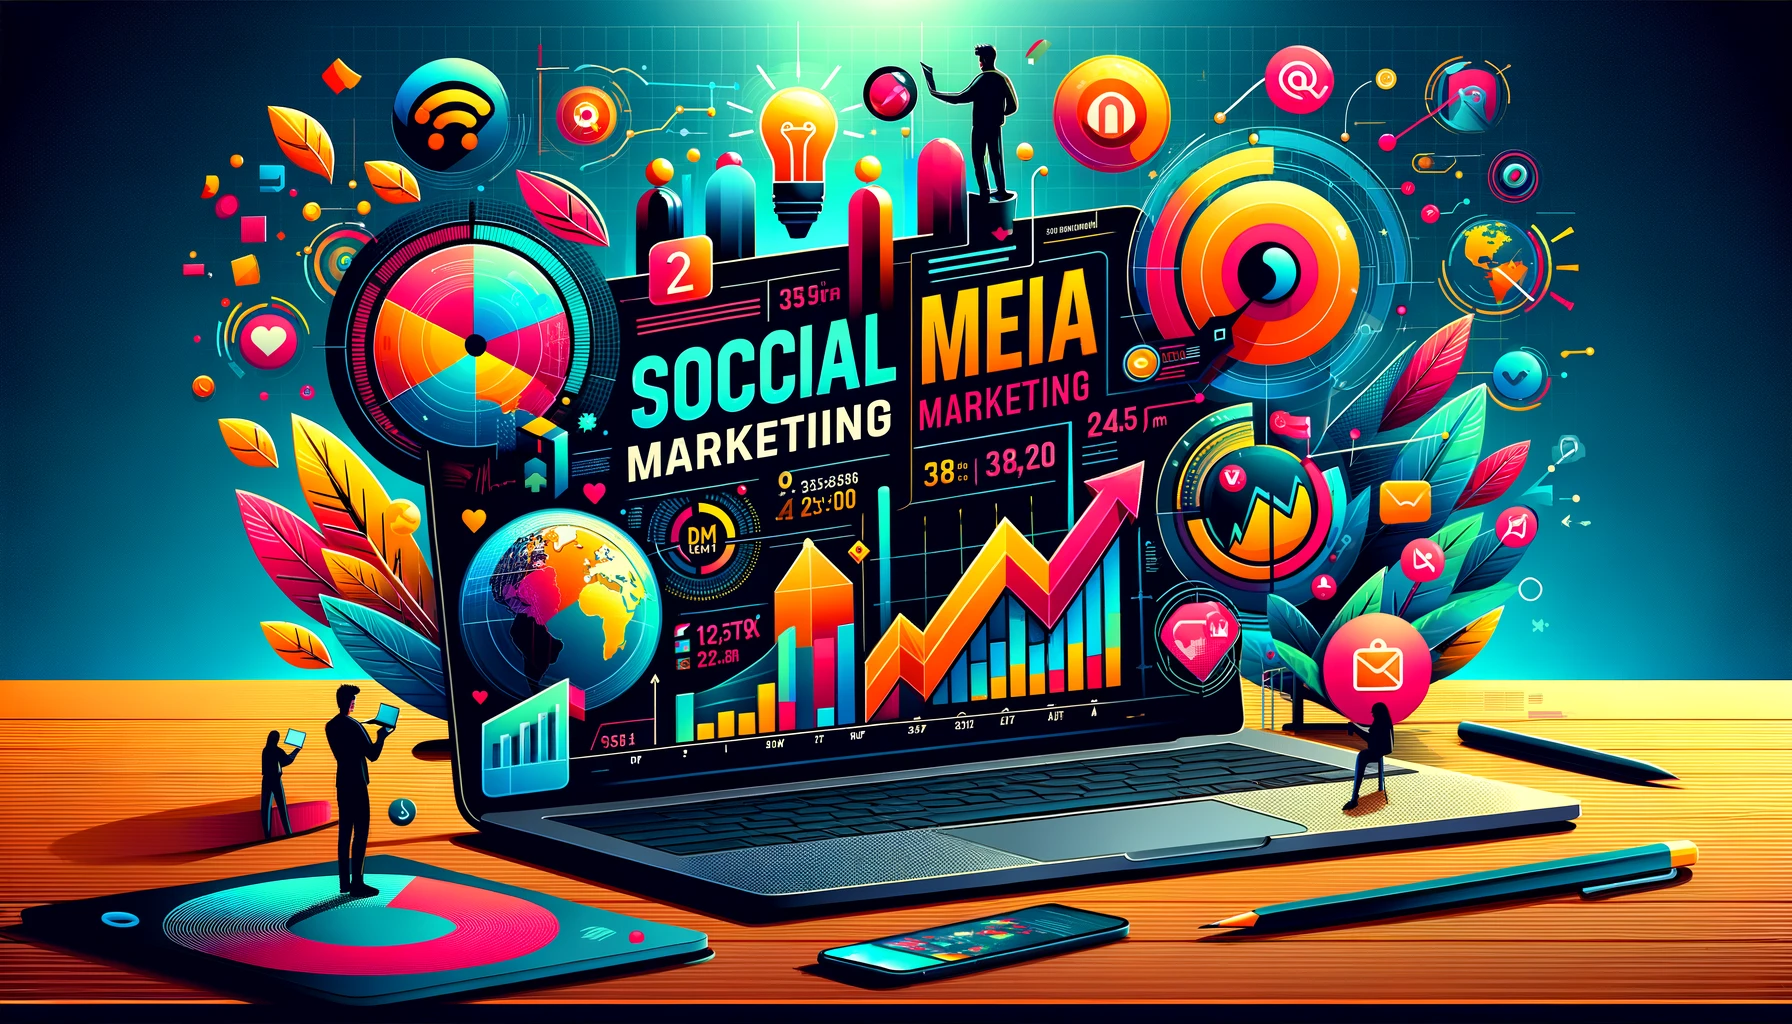 Ubaida Dib's portfolio thumbnail for social media marketing with engaging posts and analytics